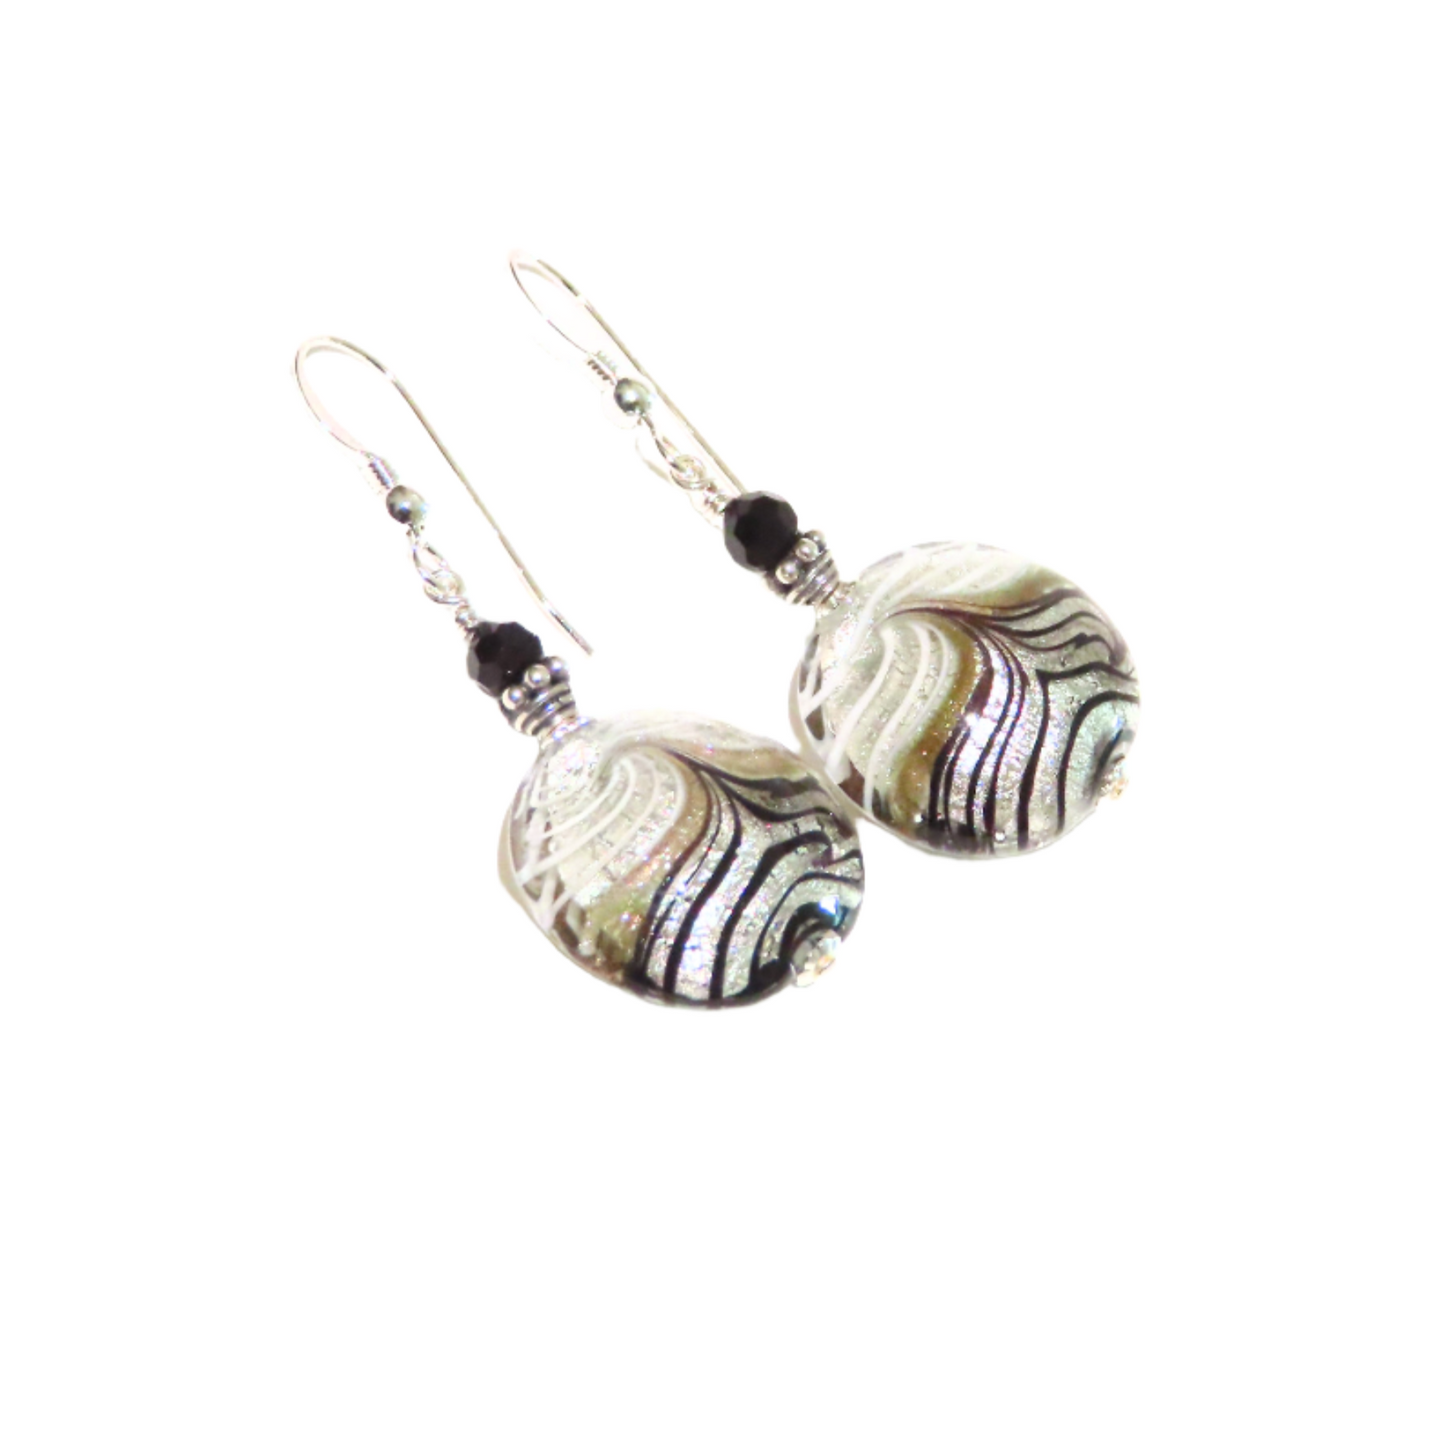 a pair of earrings handmade with Italian Murano glass beads